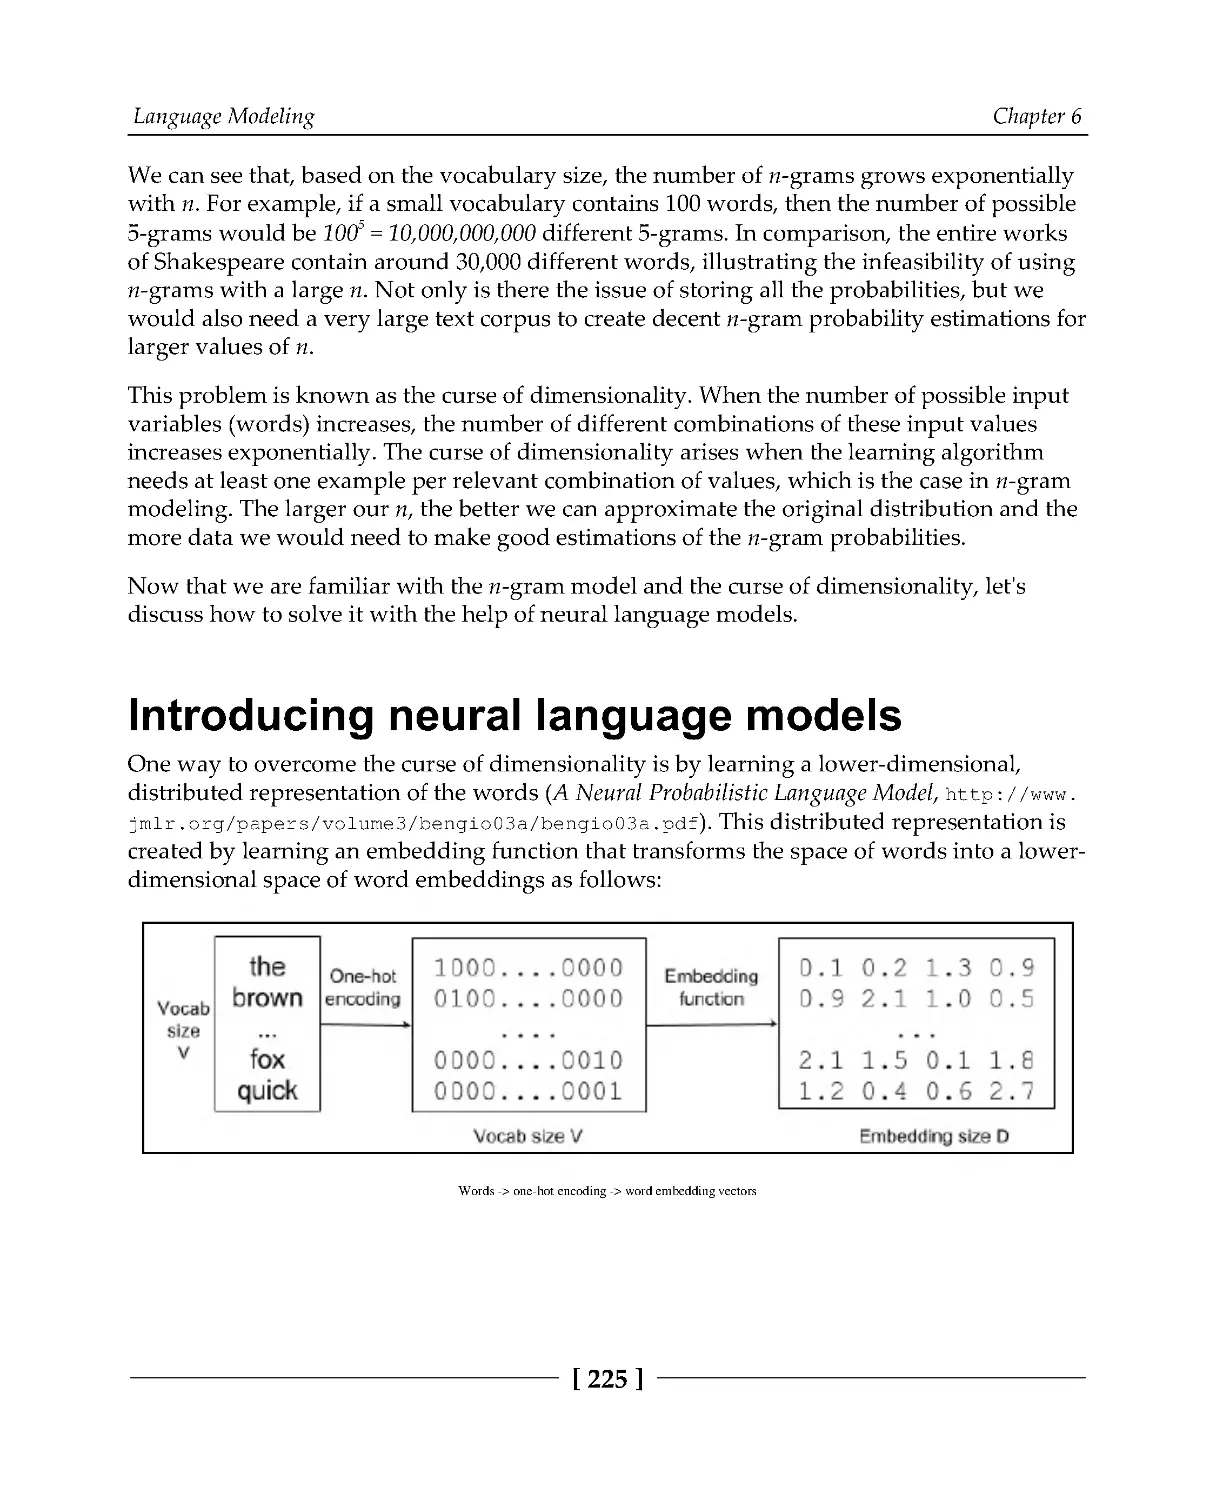 Introducing neural language models